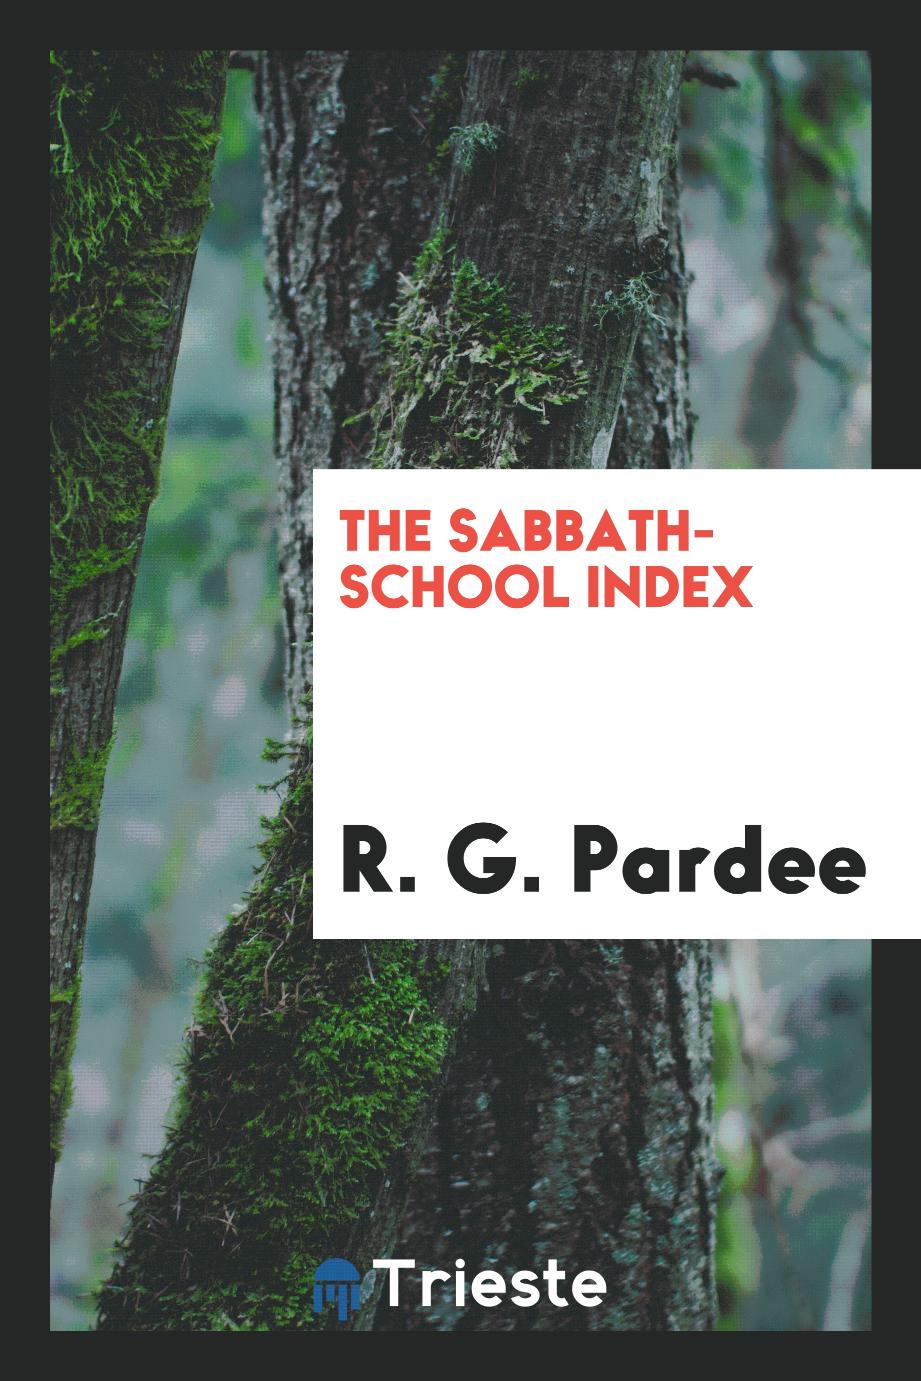 The Sabbath-school index